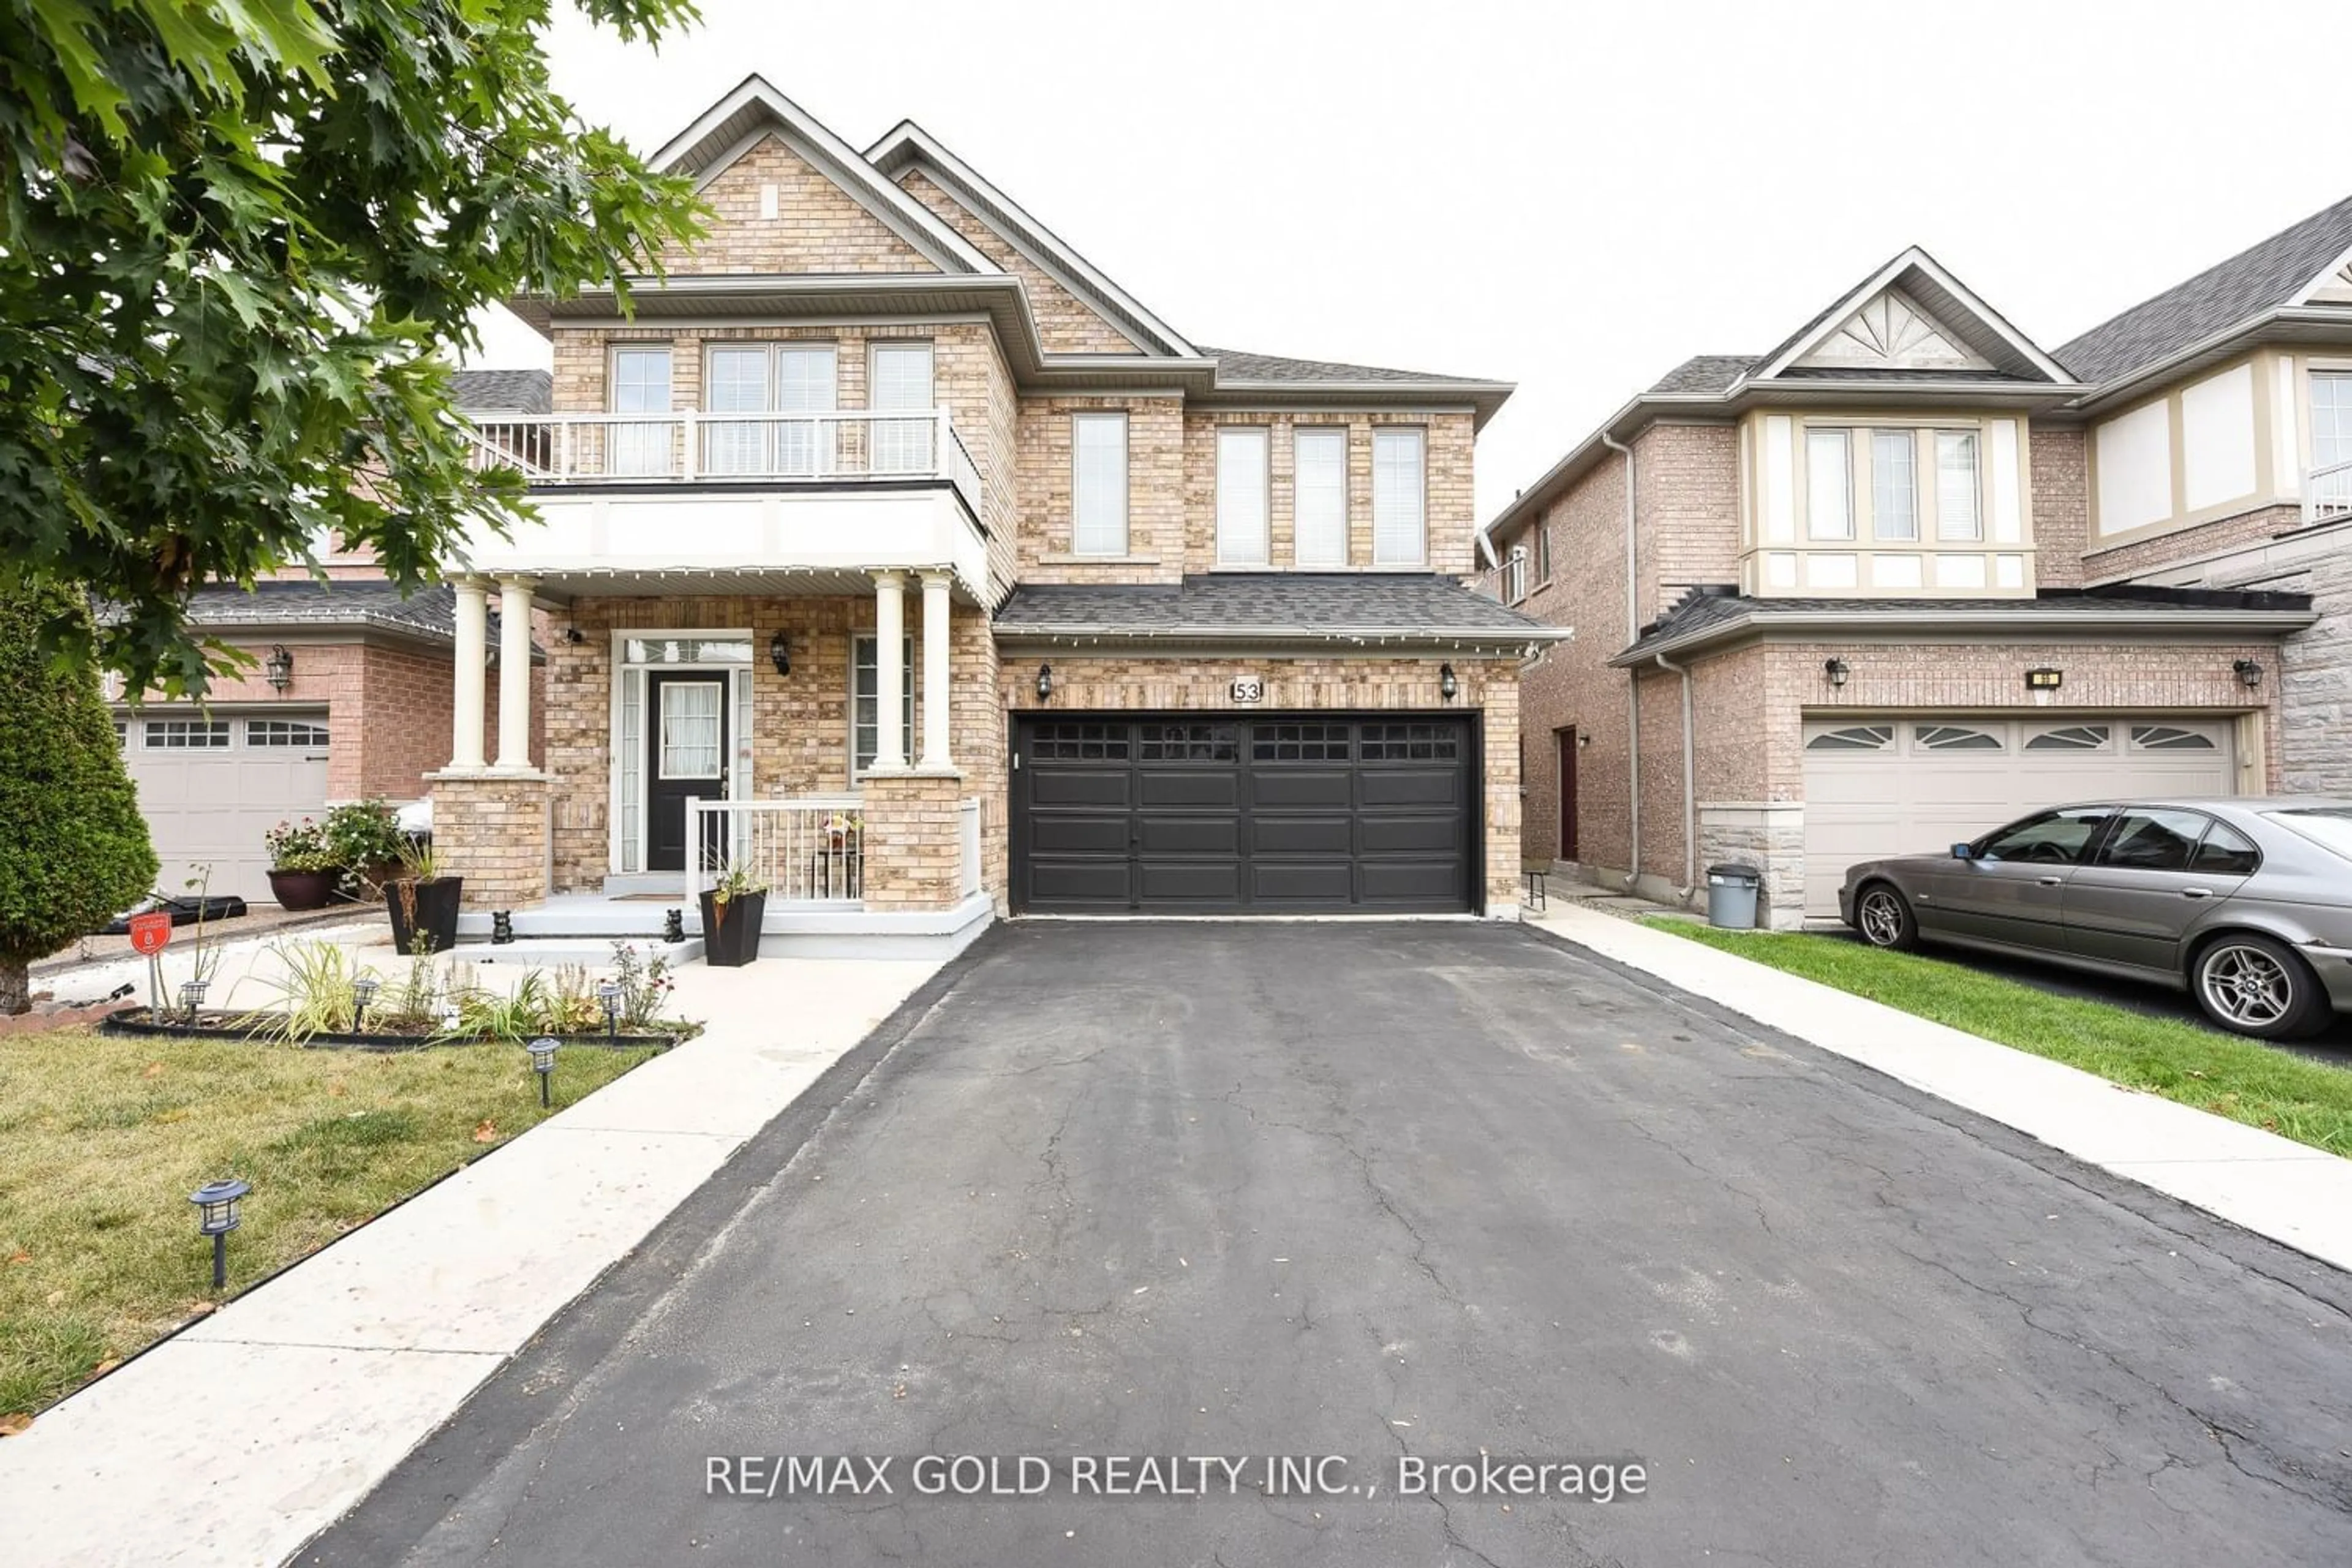 Home with brick exterior material for 53 Darren Rd, Brampton Ontario L6P 2K4